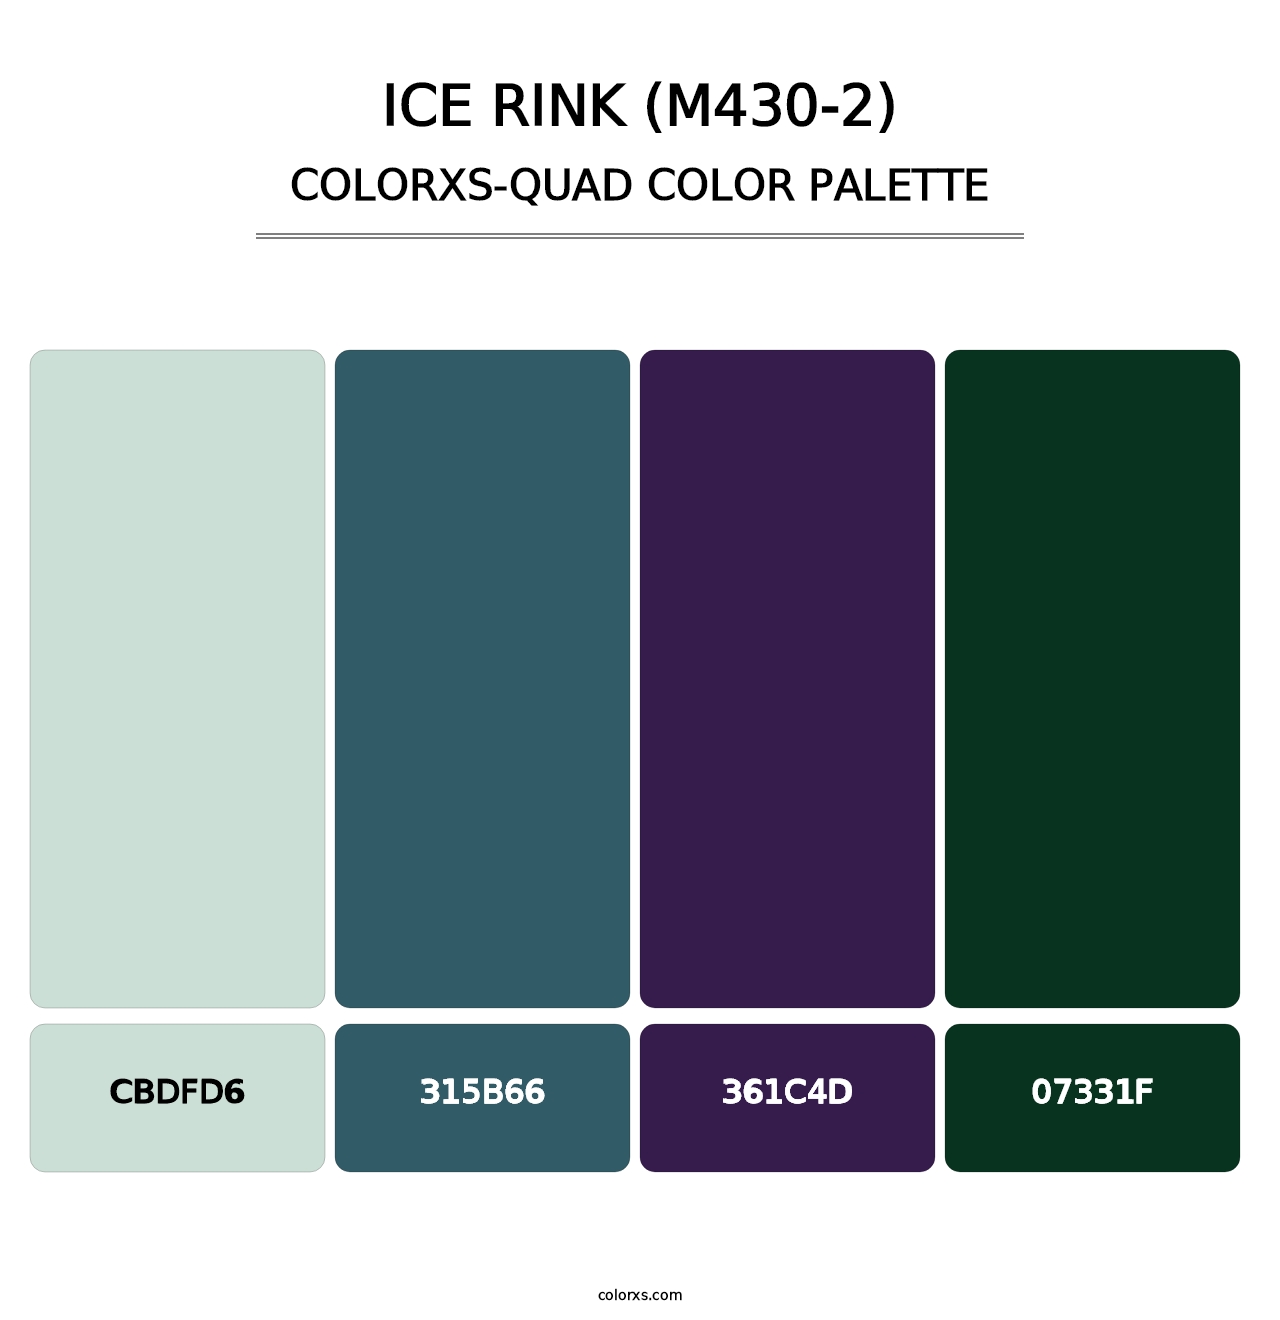 Ice Rink (M430-2) - Colorxs Quad Palette